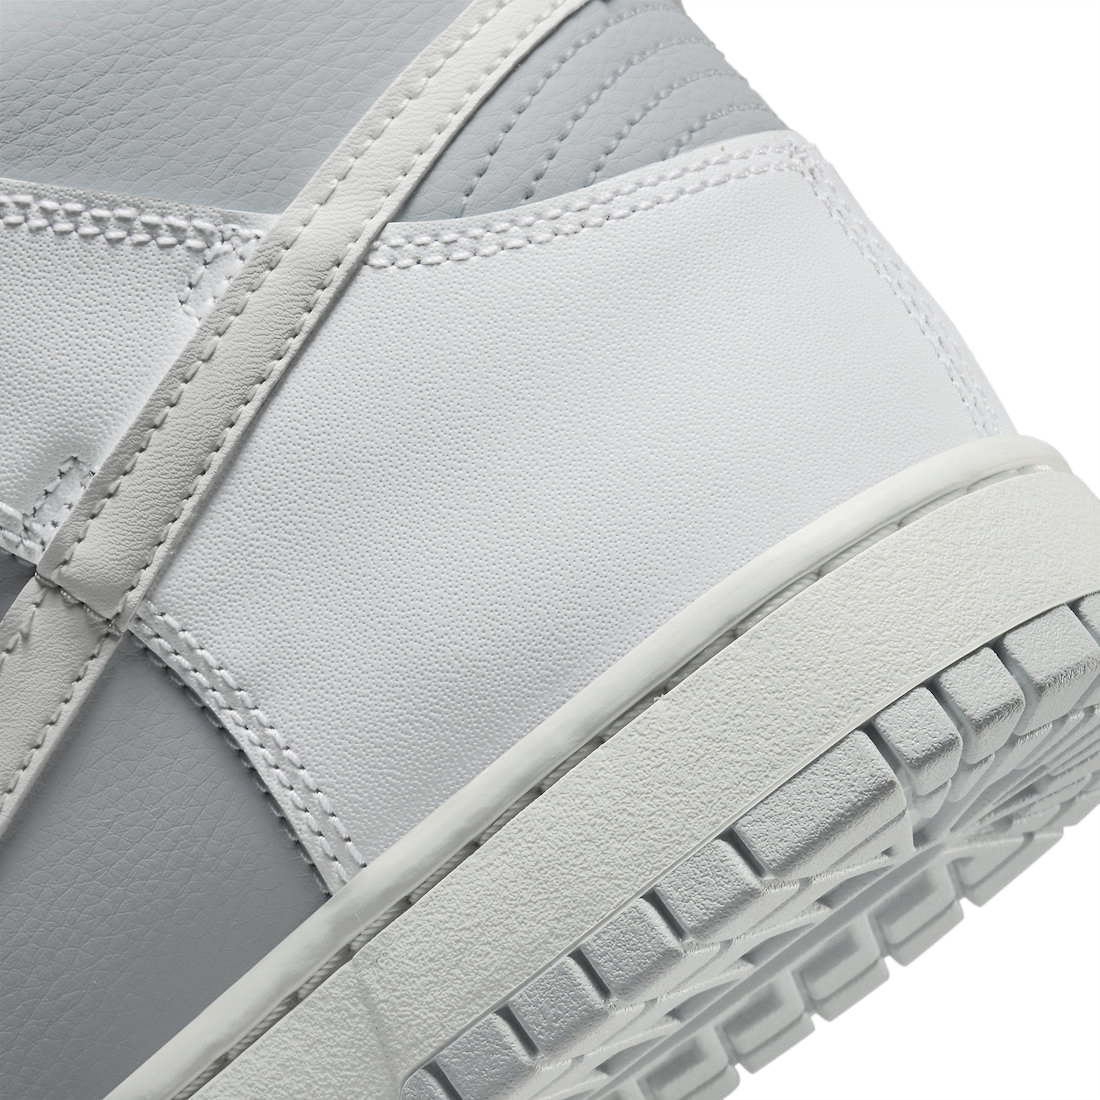 Nike Dunk High Grey White DJ6189-100 - KicksOnFire.com